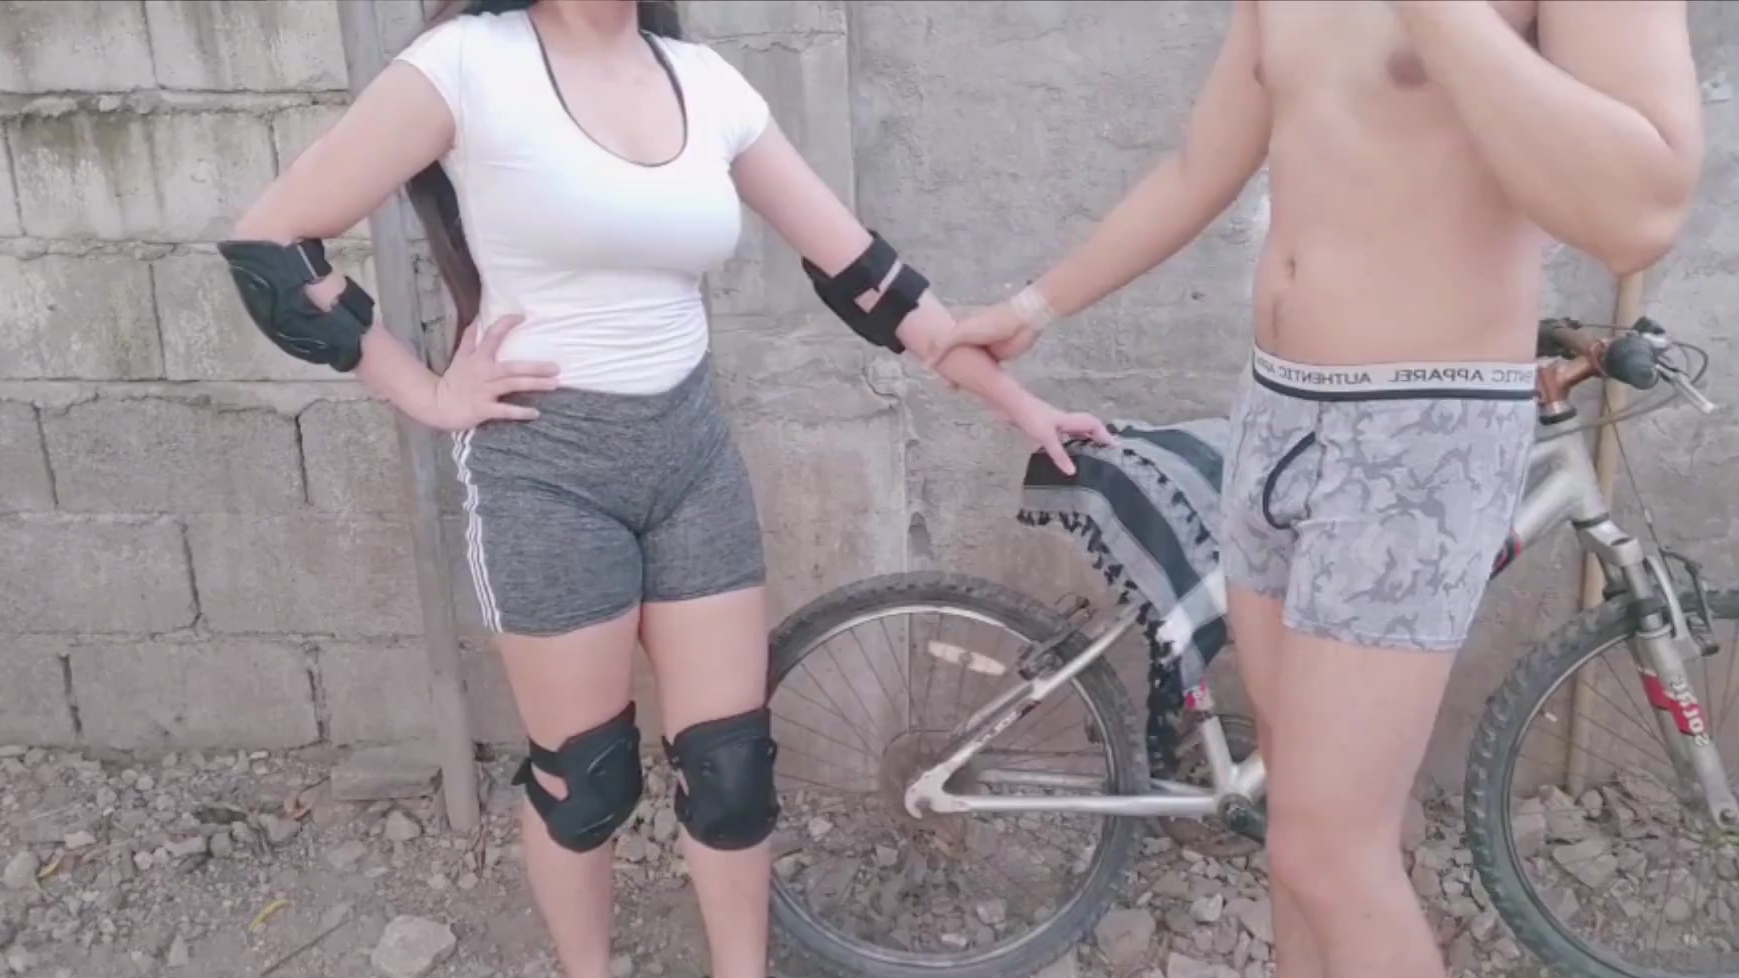 Asian female bike enthusiast fucks with a random guy outdoors